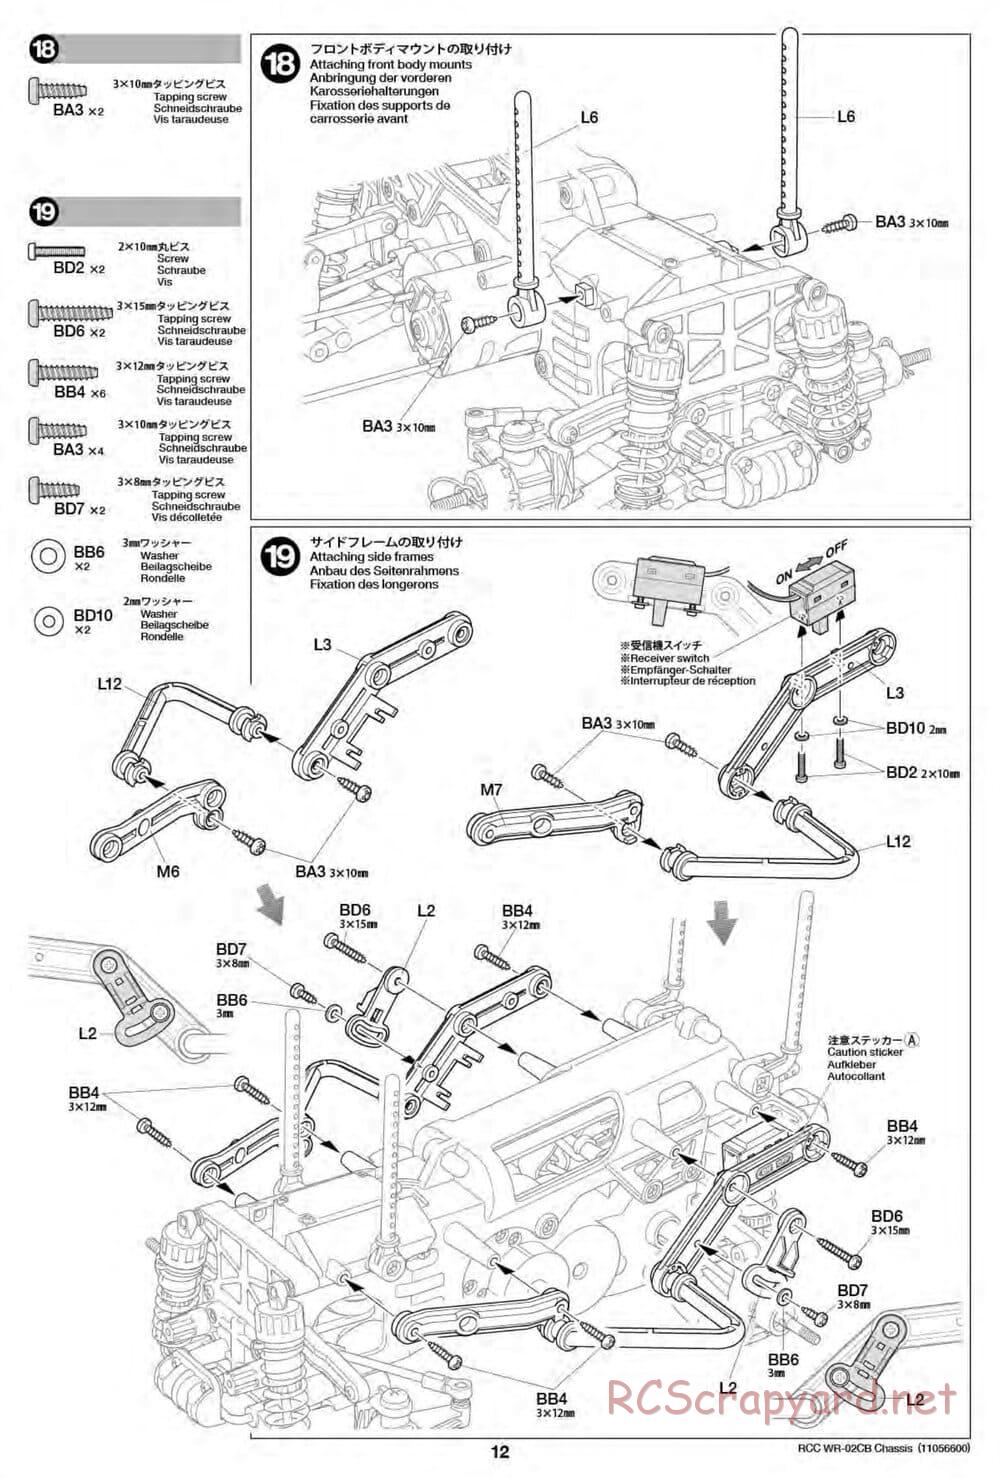 Tamiya - WR-02CB Chassis - Manual - Page 12